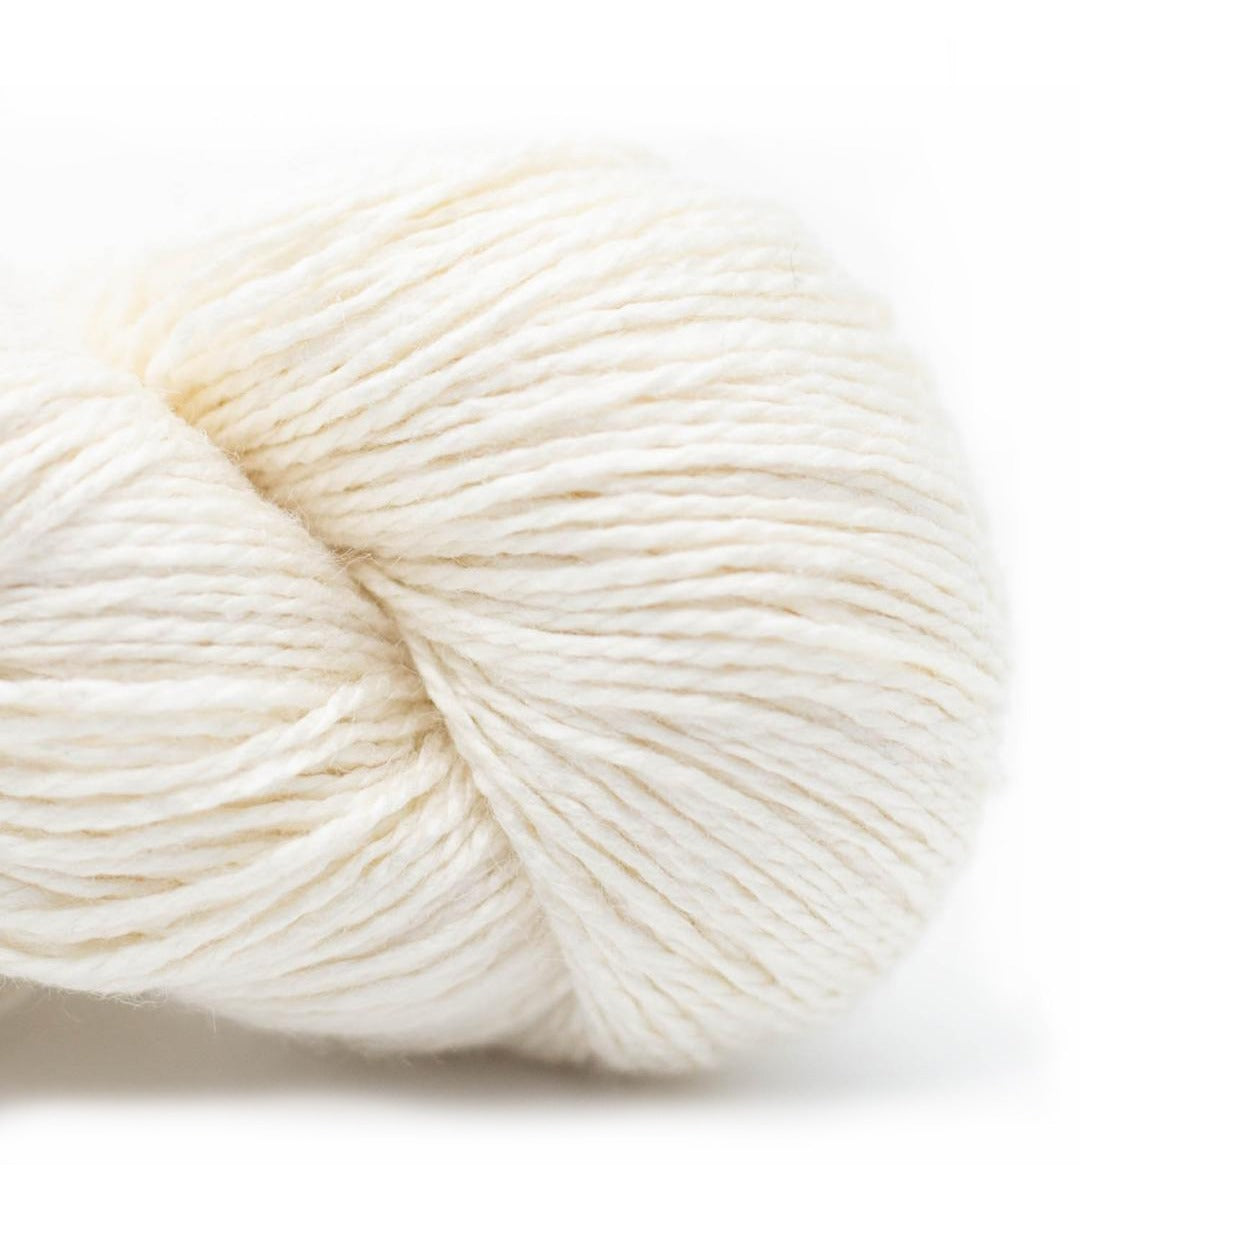 Silk Linen Fingering Weight Yarn – Mindful Yarns